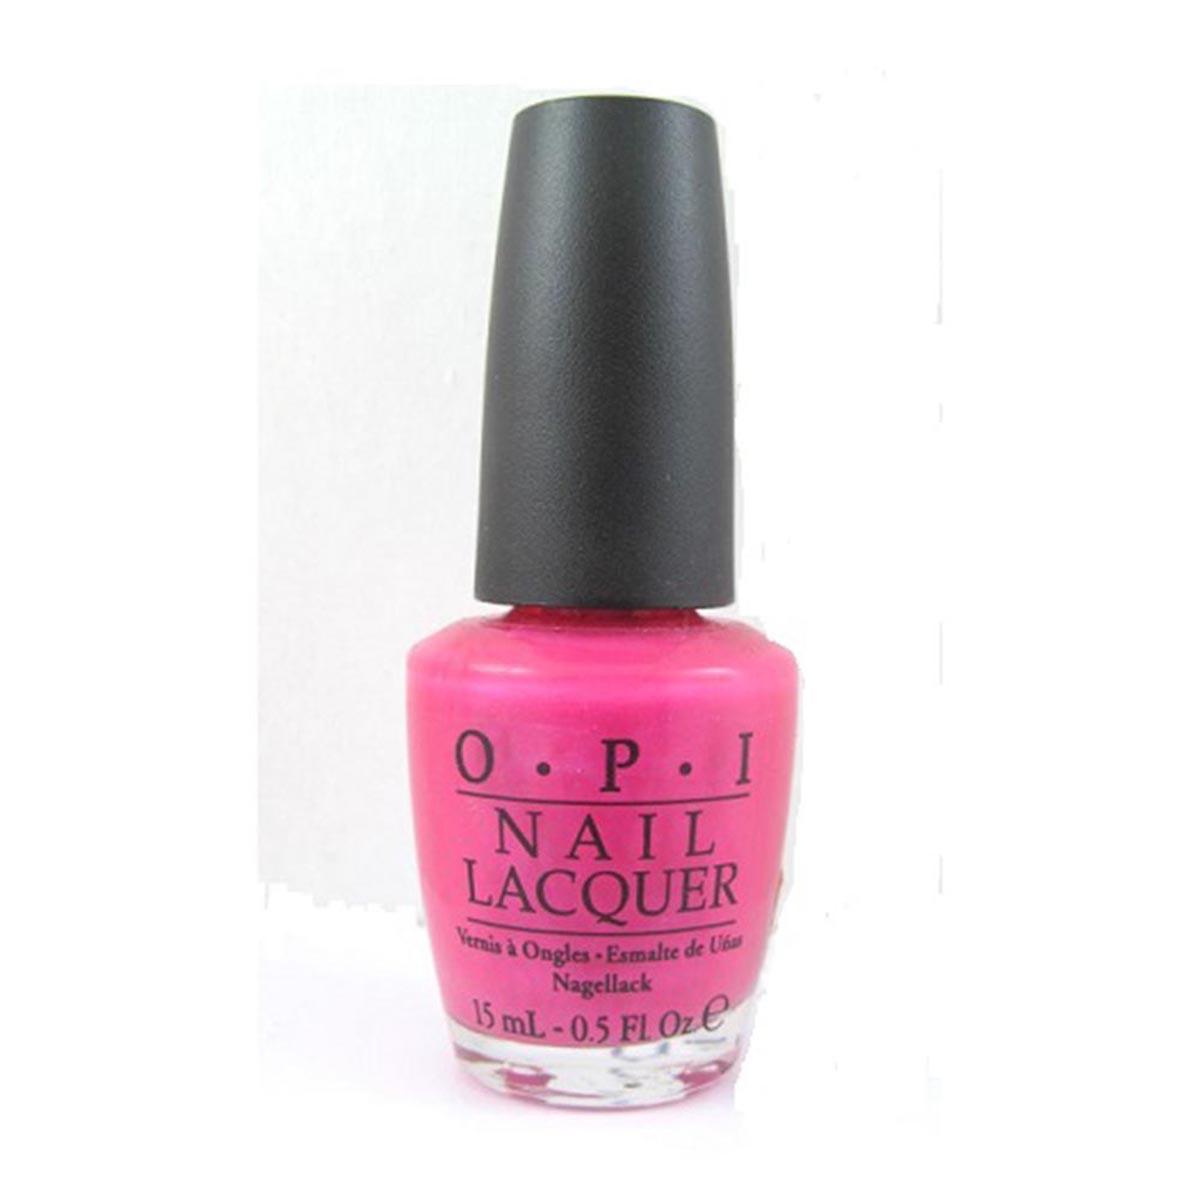 opi-nail-lacquer-nla20-la-pazitively